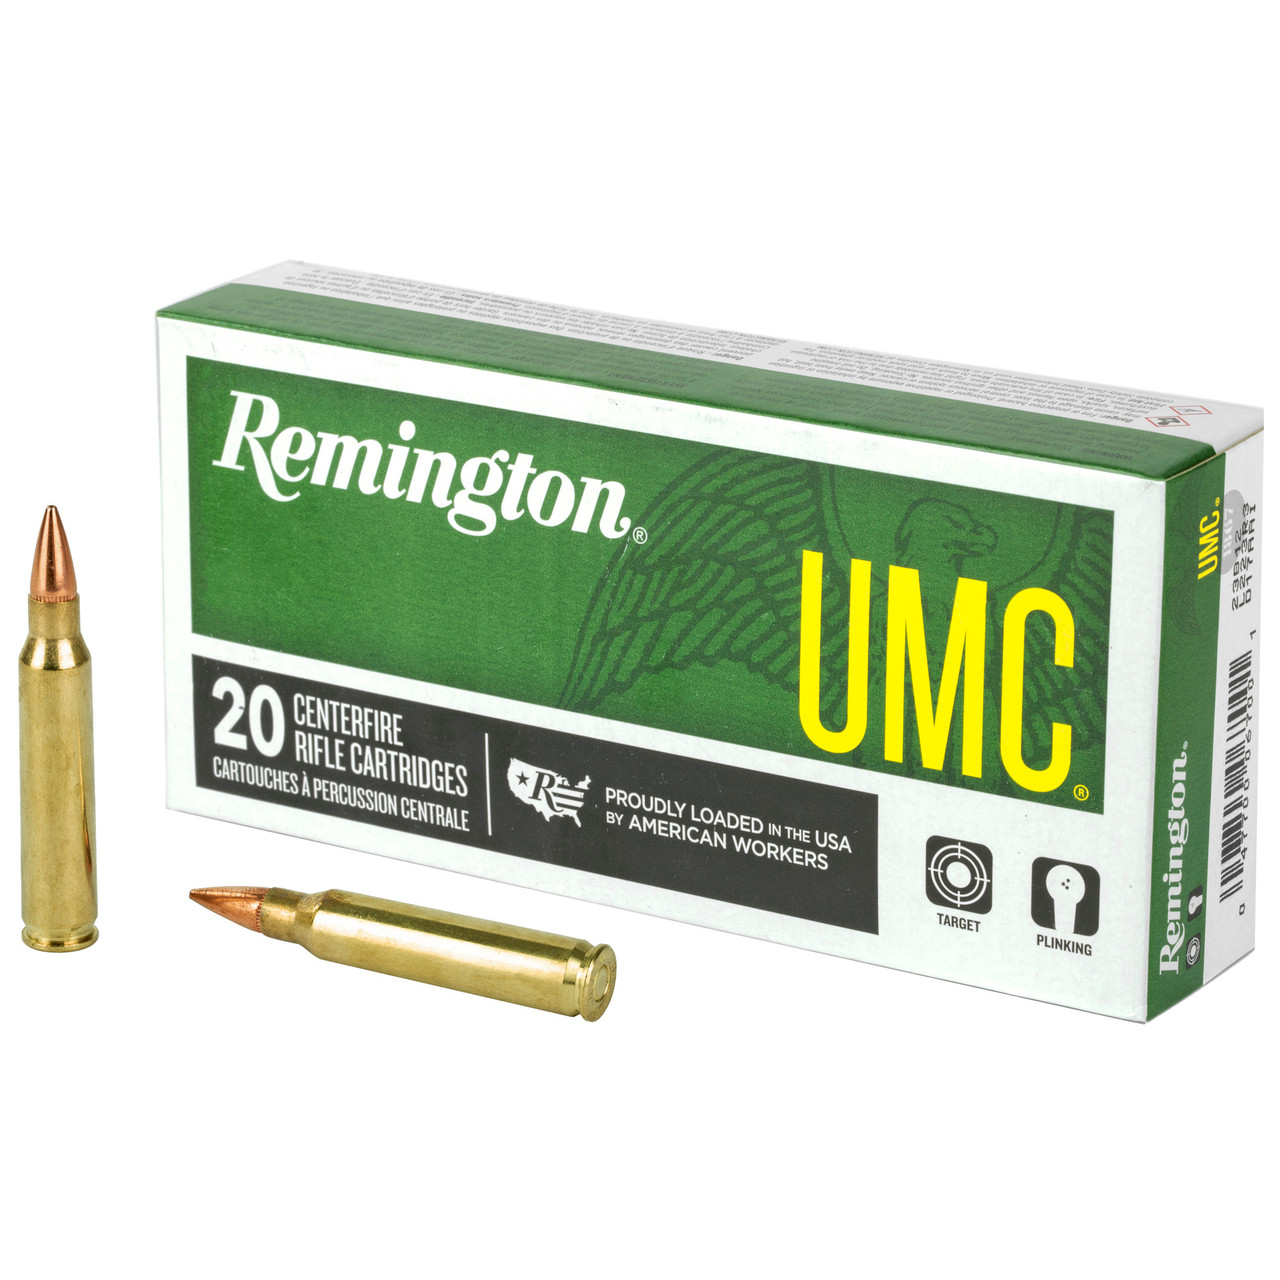 Remington R23812 Umc 22350gr Hp 20/200